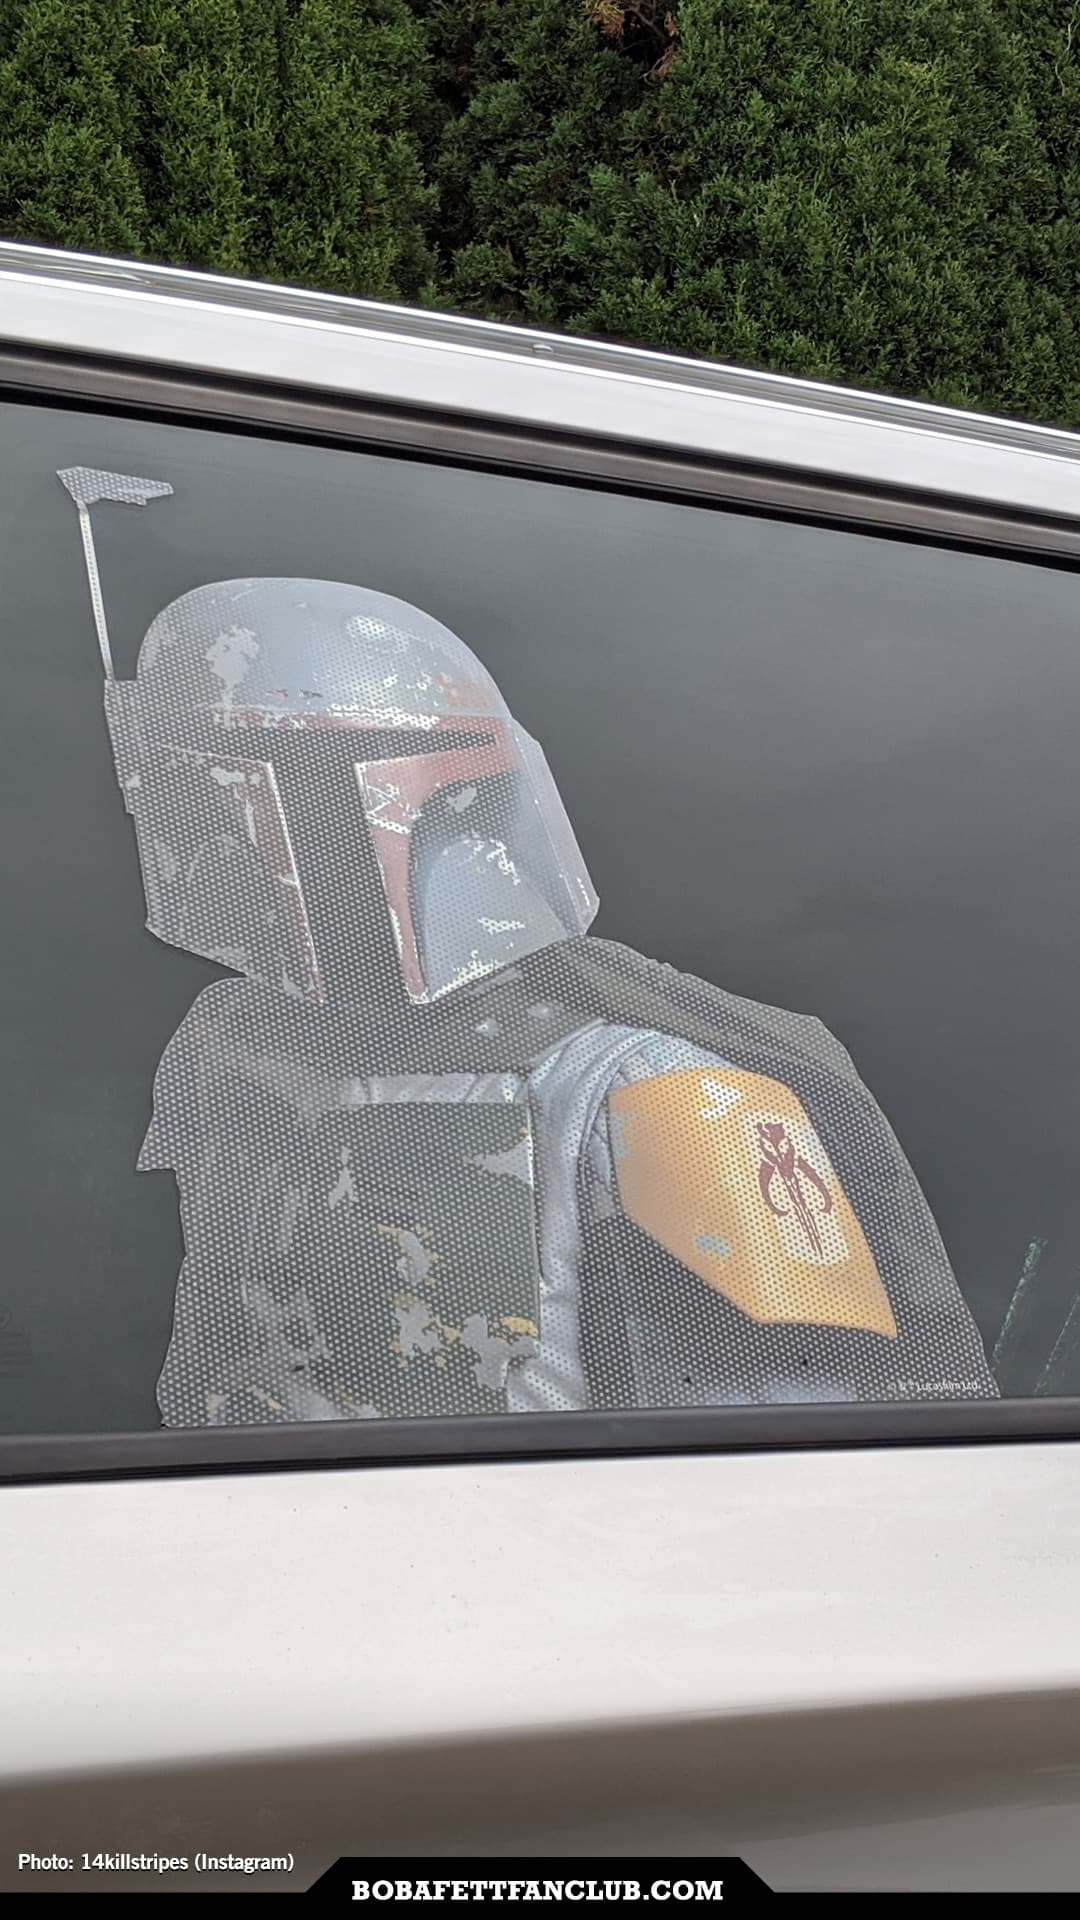 6" Mandalorian Boba Fett Star Wars car window decal sticker 13 COLORS